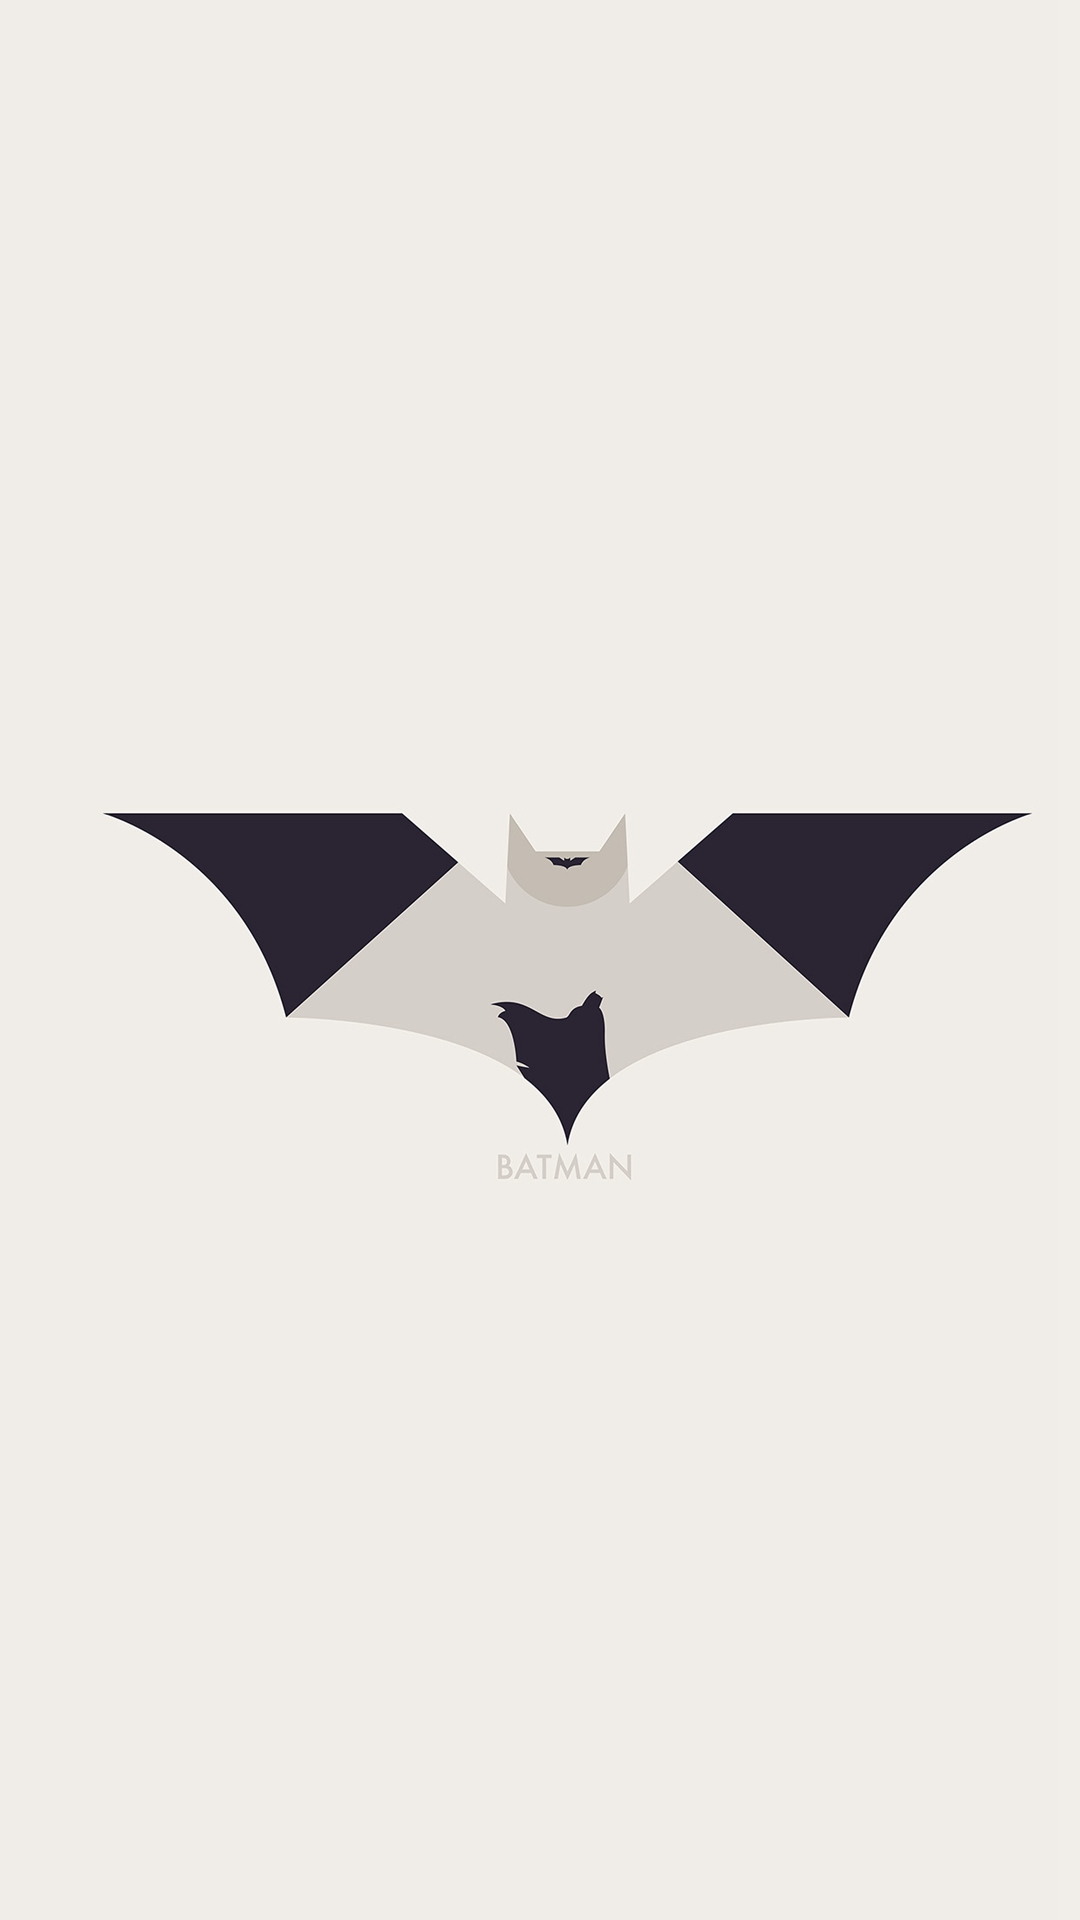 Batman Logo Wallpapers iphone by mobi900 on DeviantArt